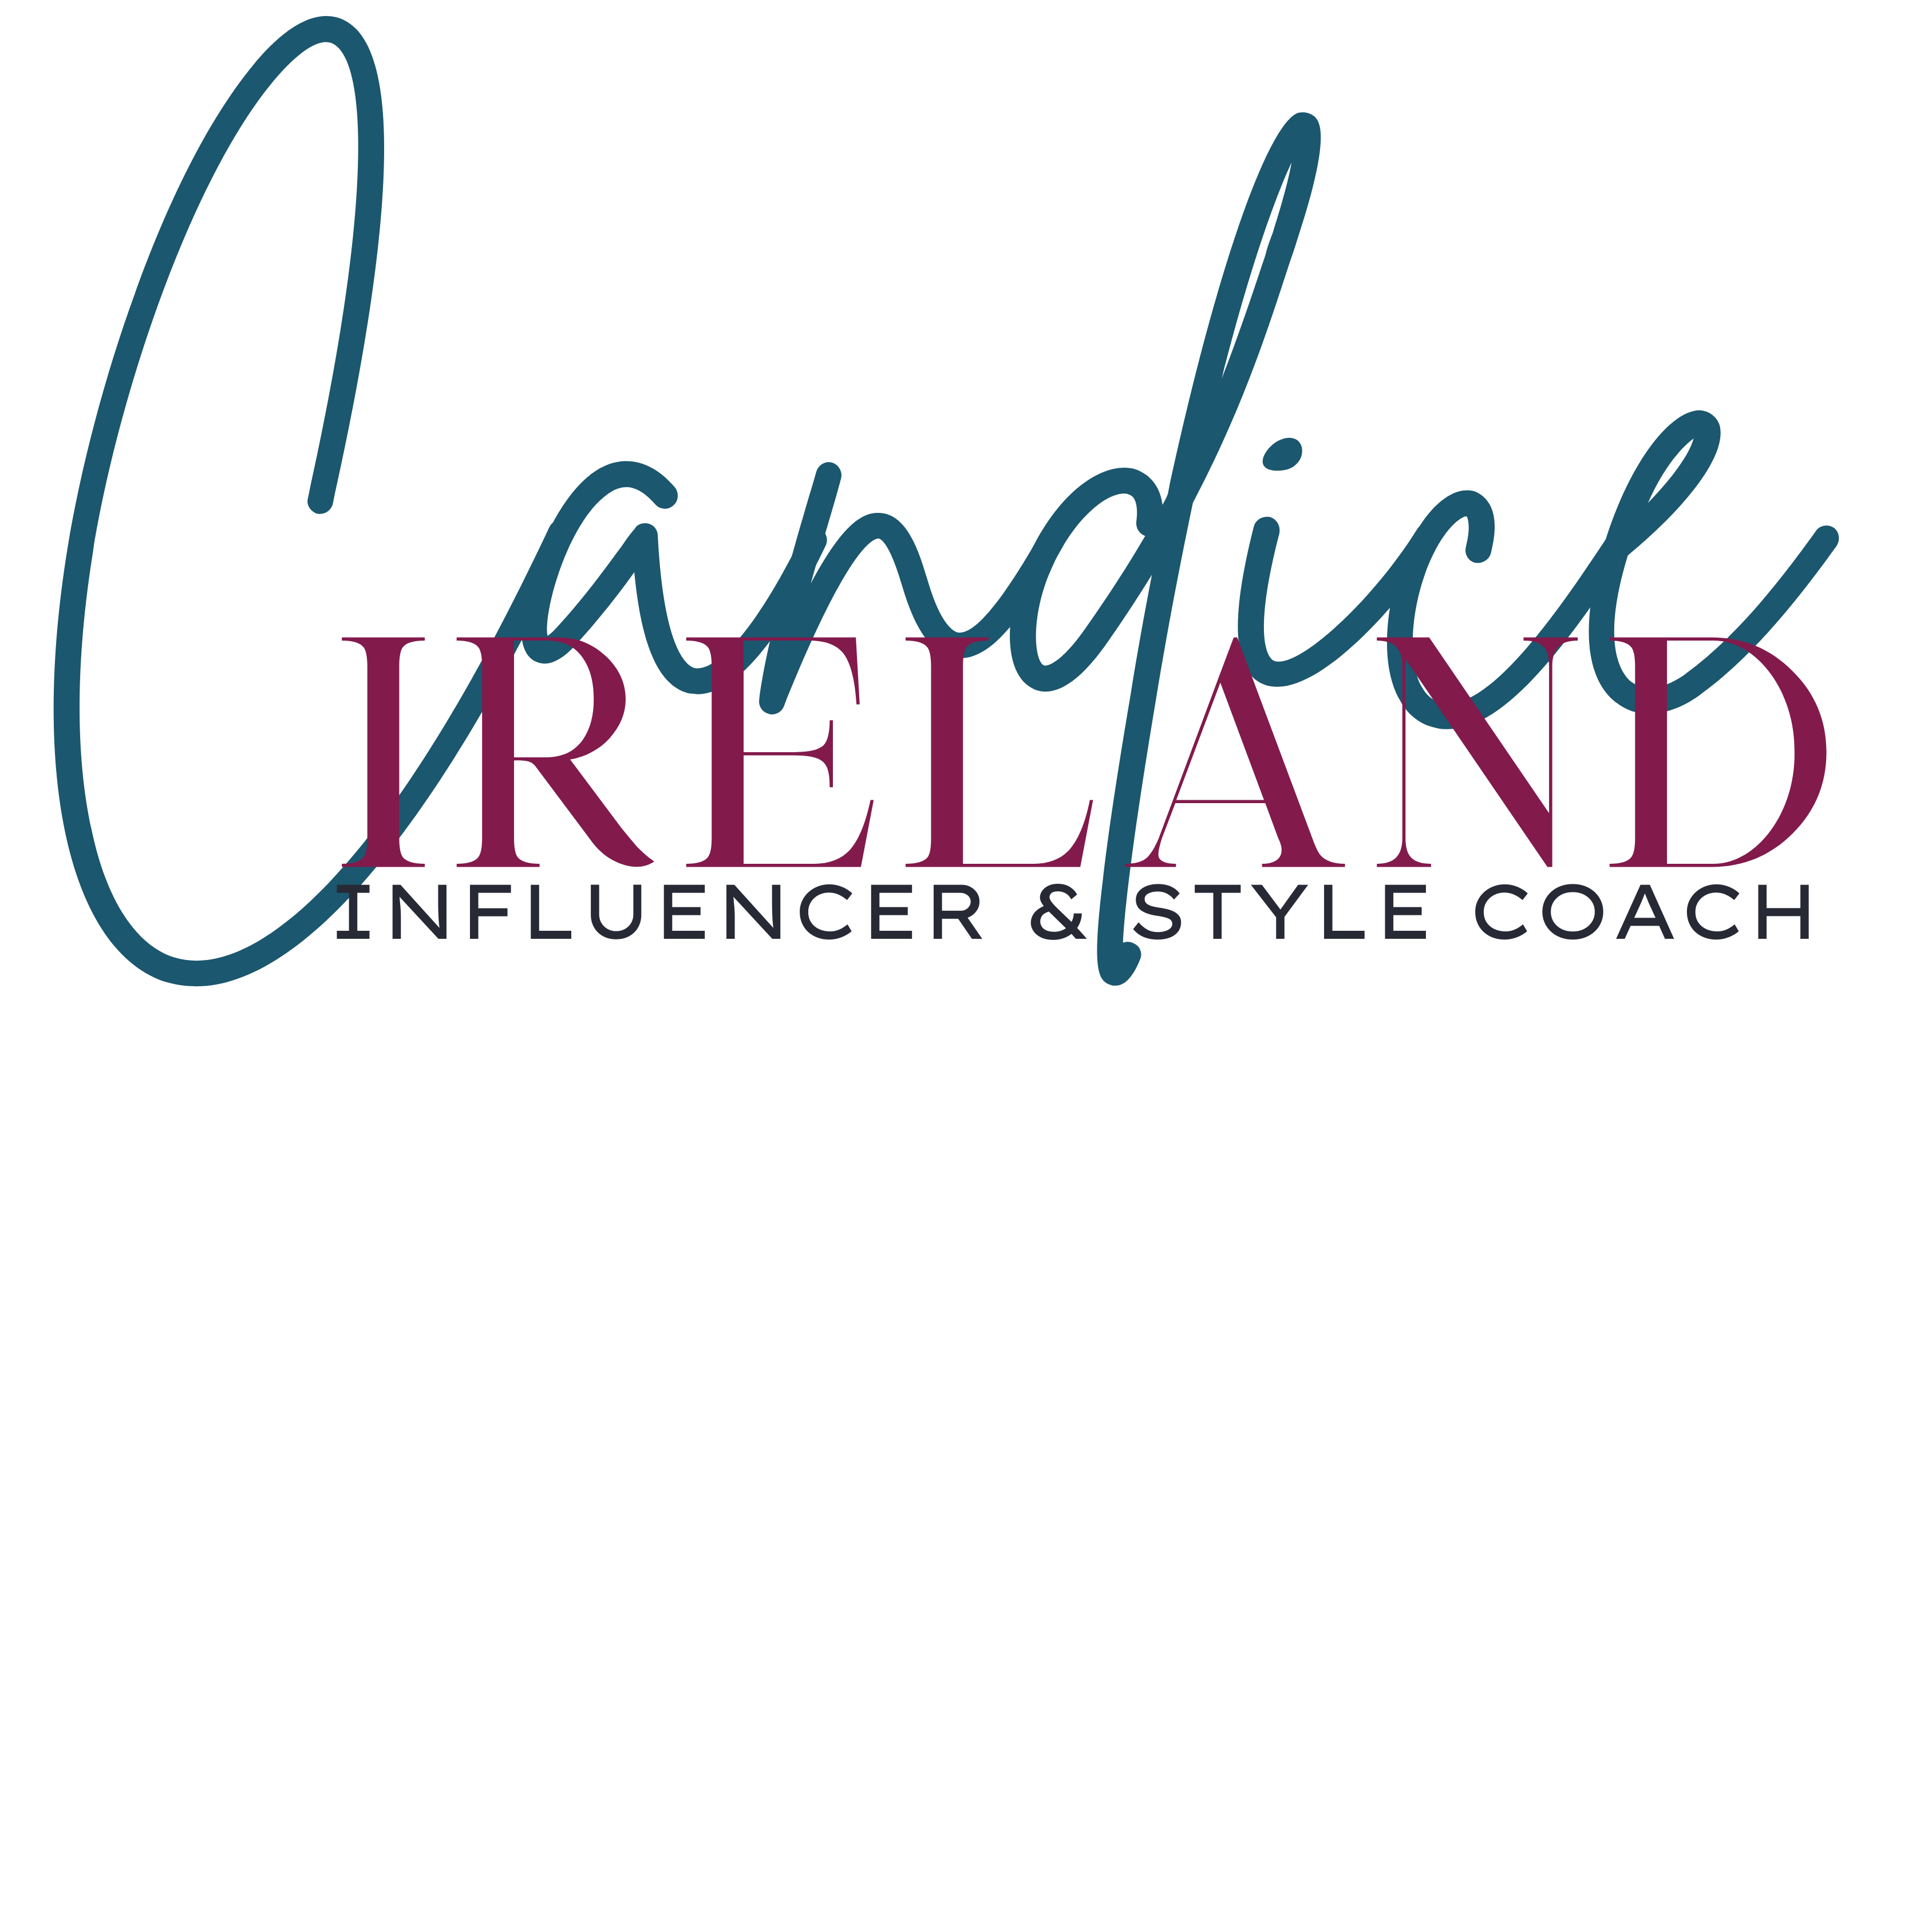 The Candice Ireland